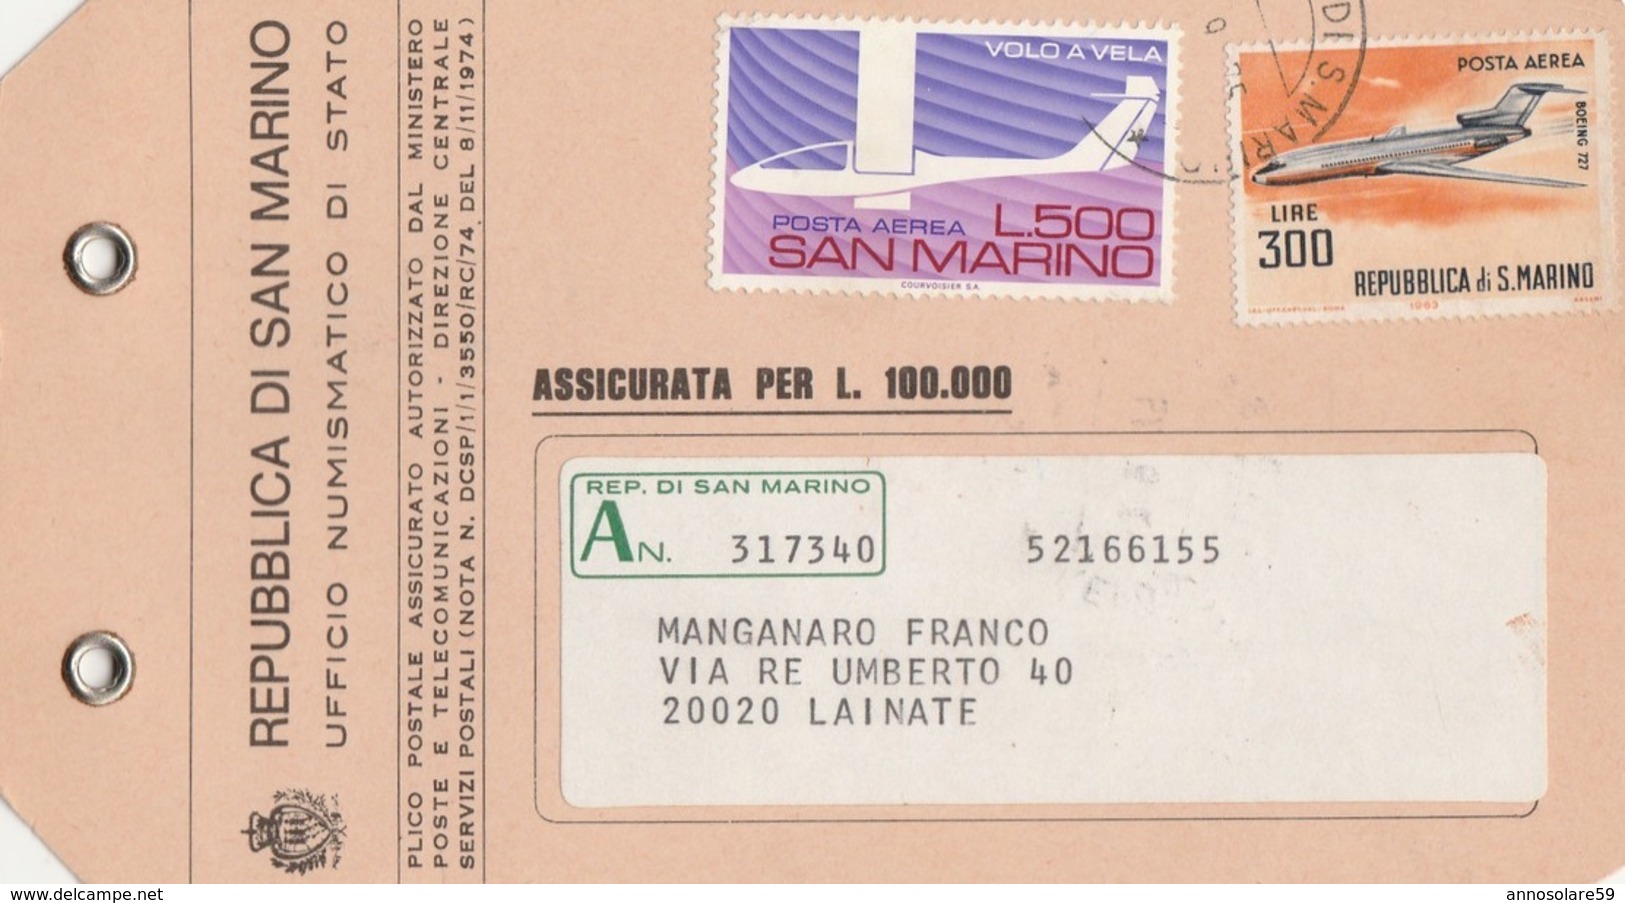 AIRPLANES - SAN MARINO - STORIA POSTALE - ETICHETTA PLICCO POSTALE - BELLISSIMA 1975 - LEGGI - Otros Medios De Transporte